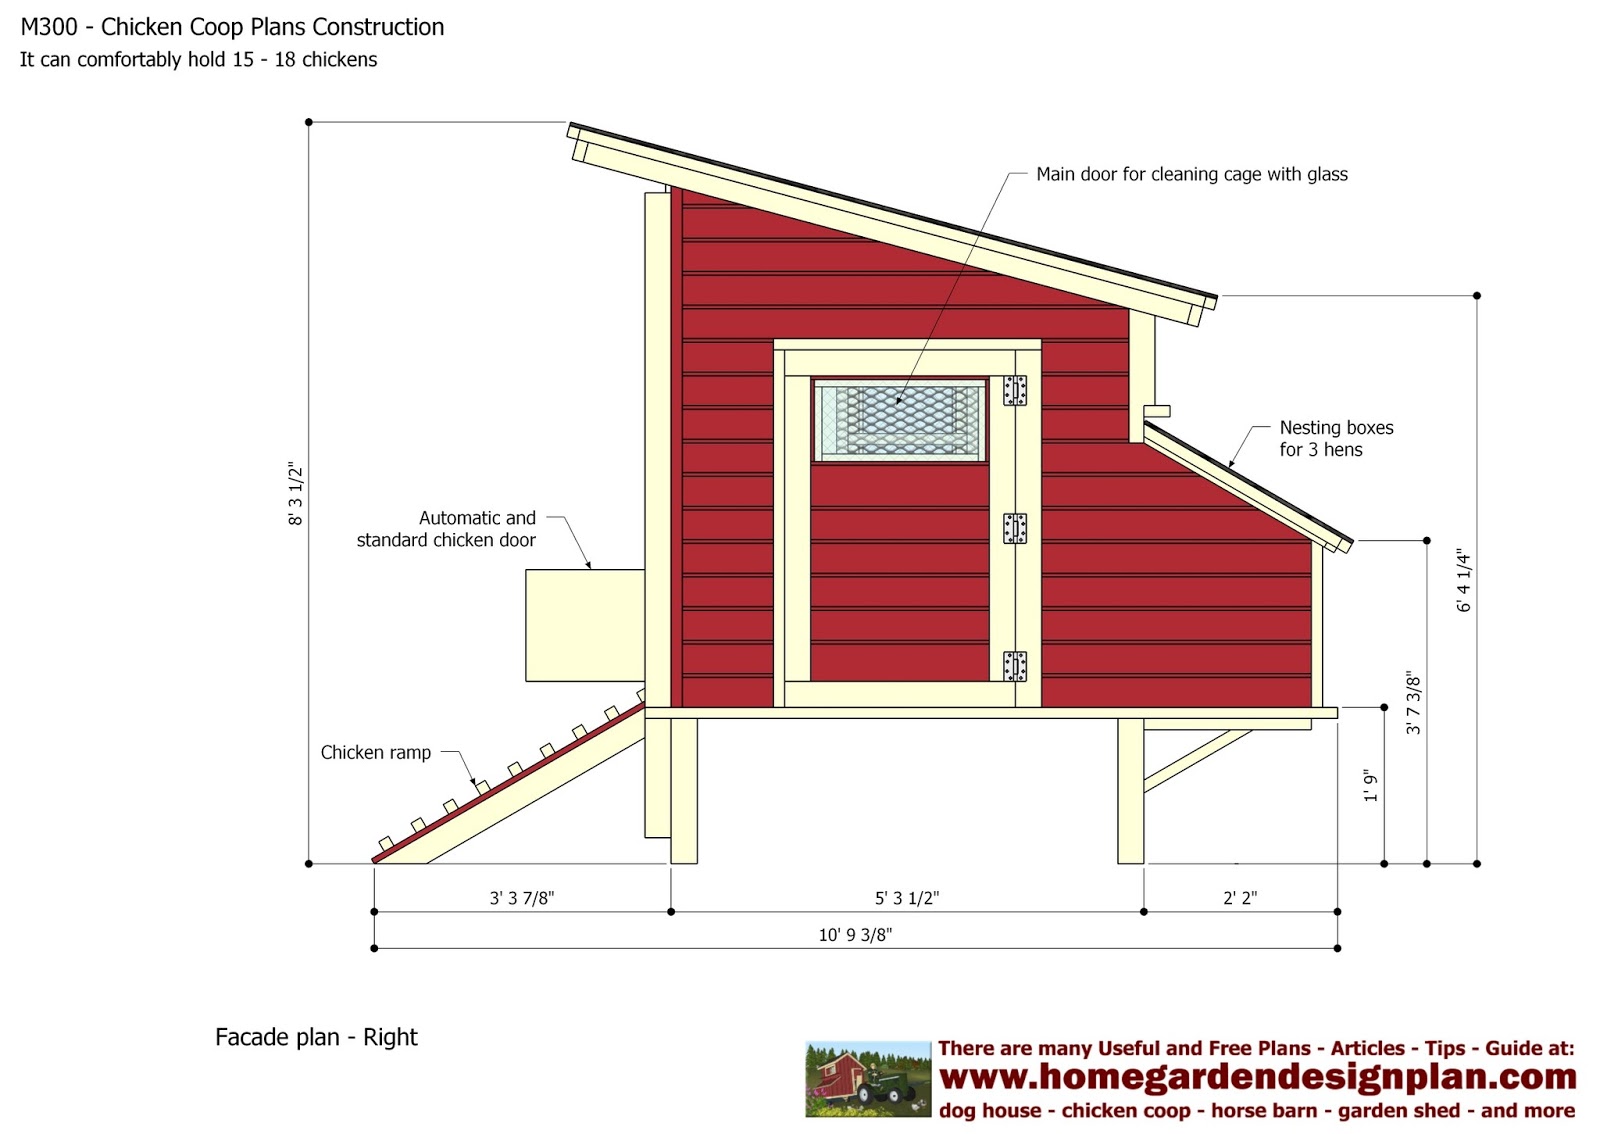  Chicken Coop Plans - Chicken Coop Design - How To Build A Chicken Coop